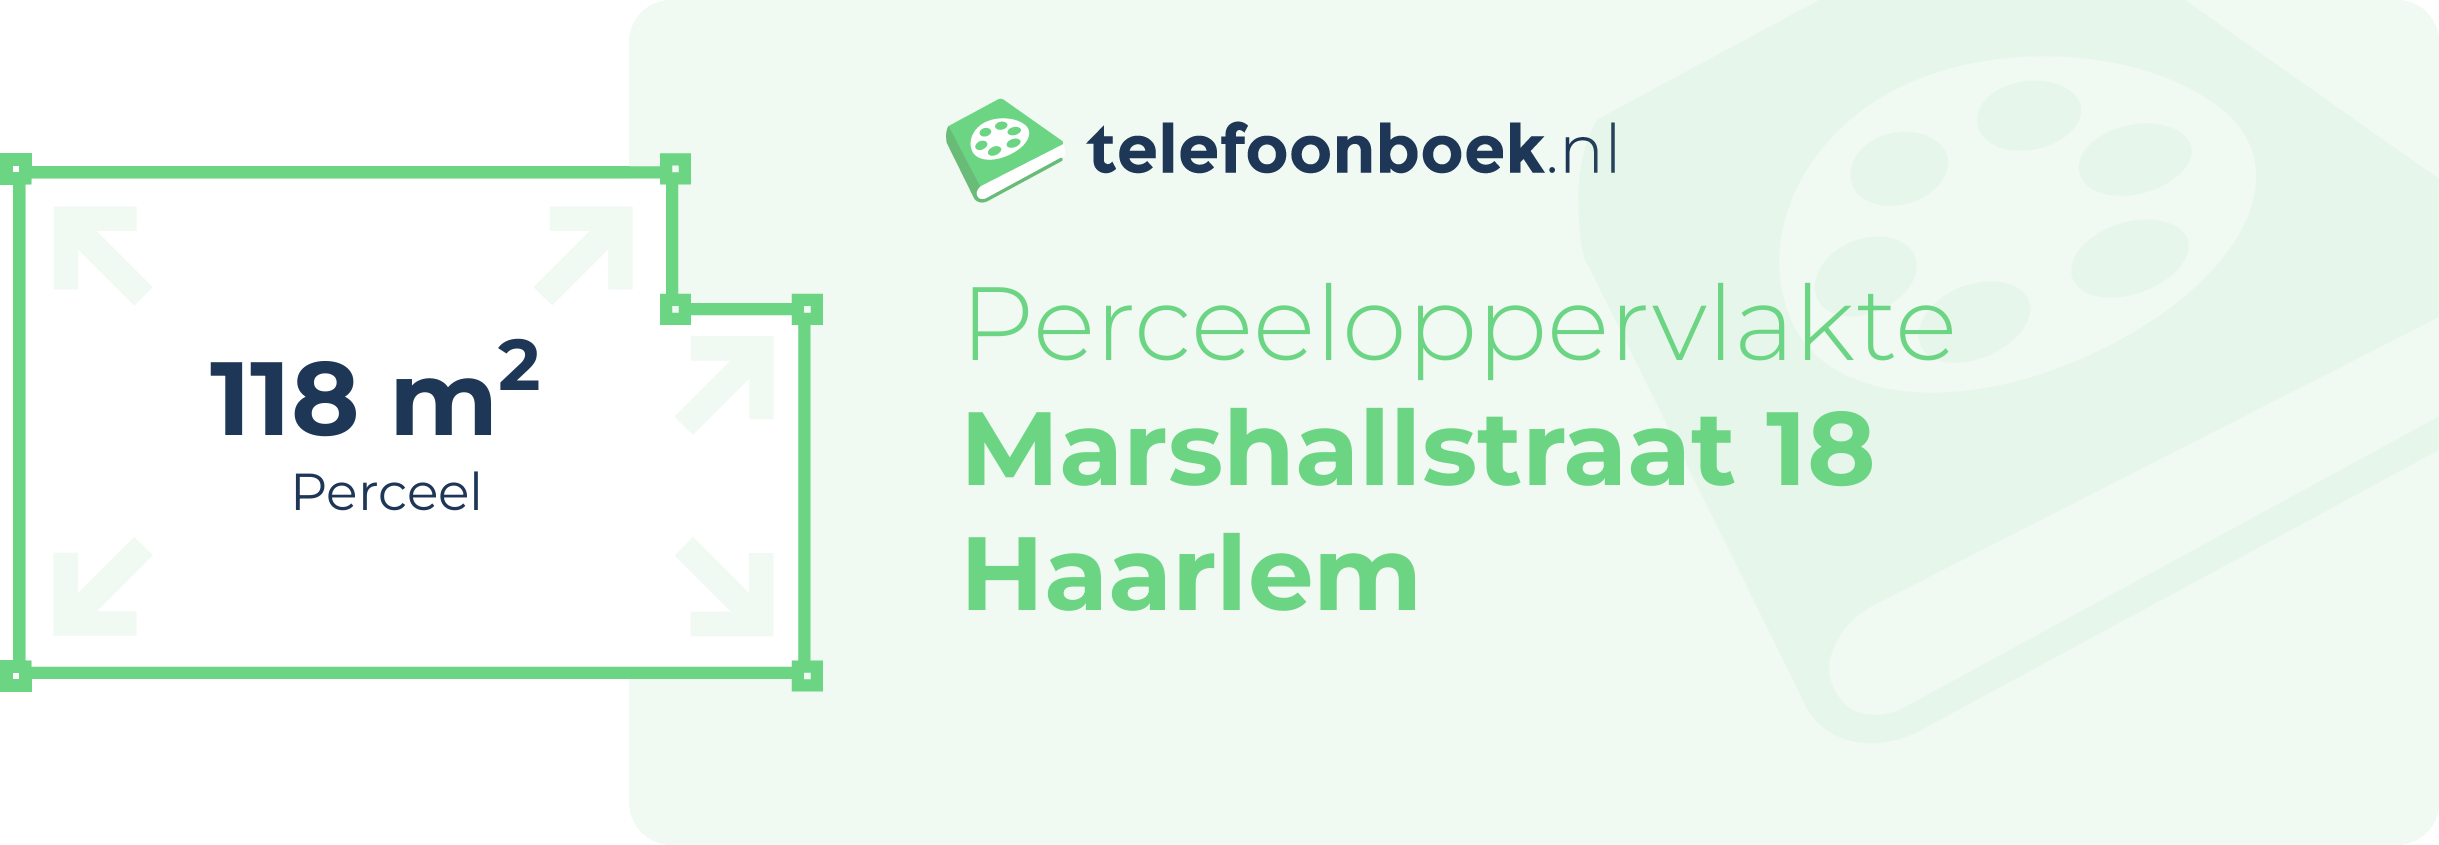 Perceeloppervlakte Marshallstraat 18 Haarlem